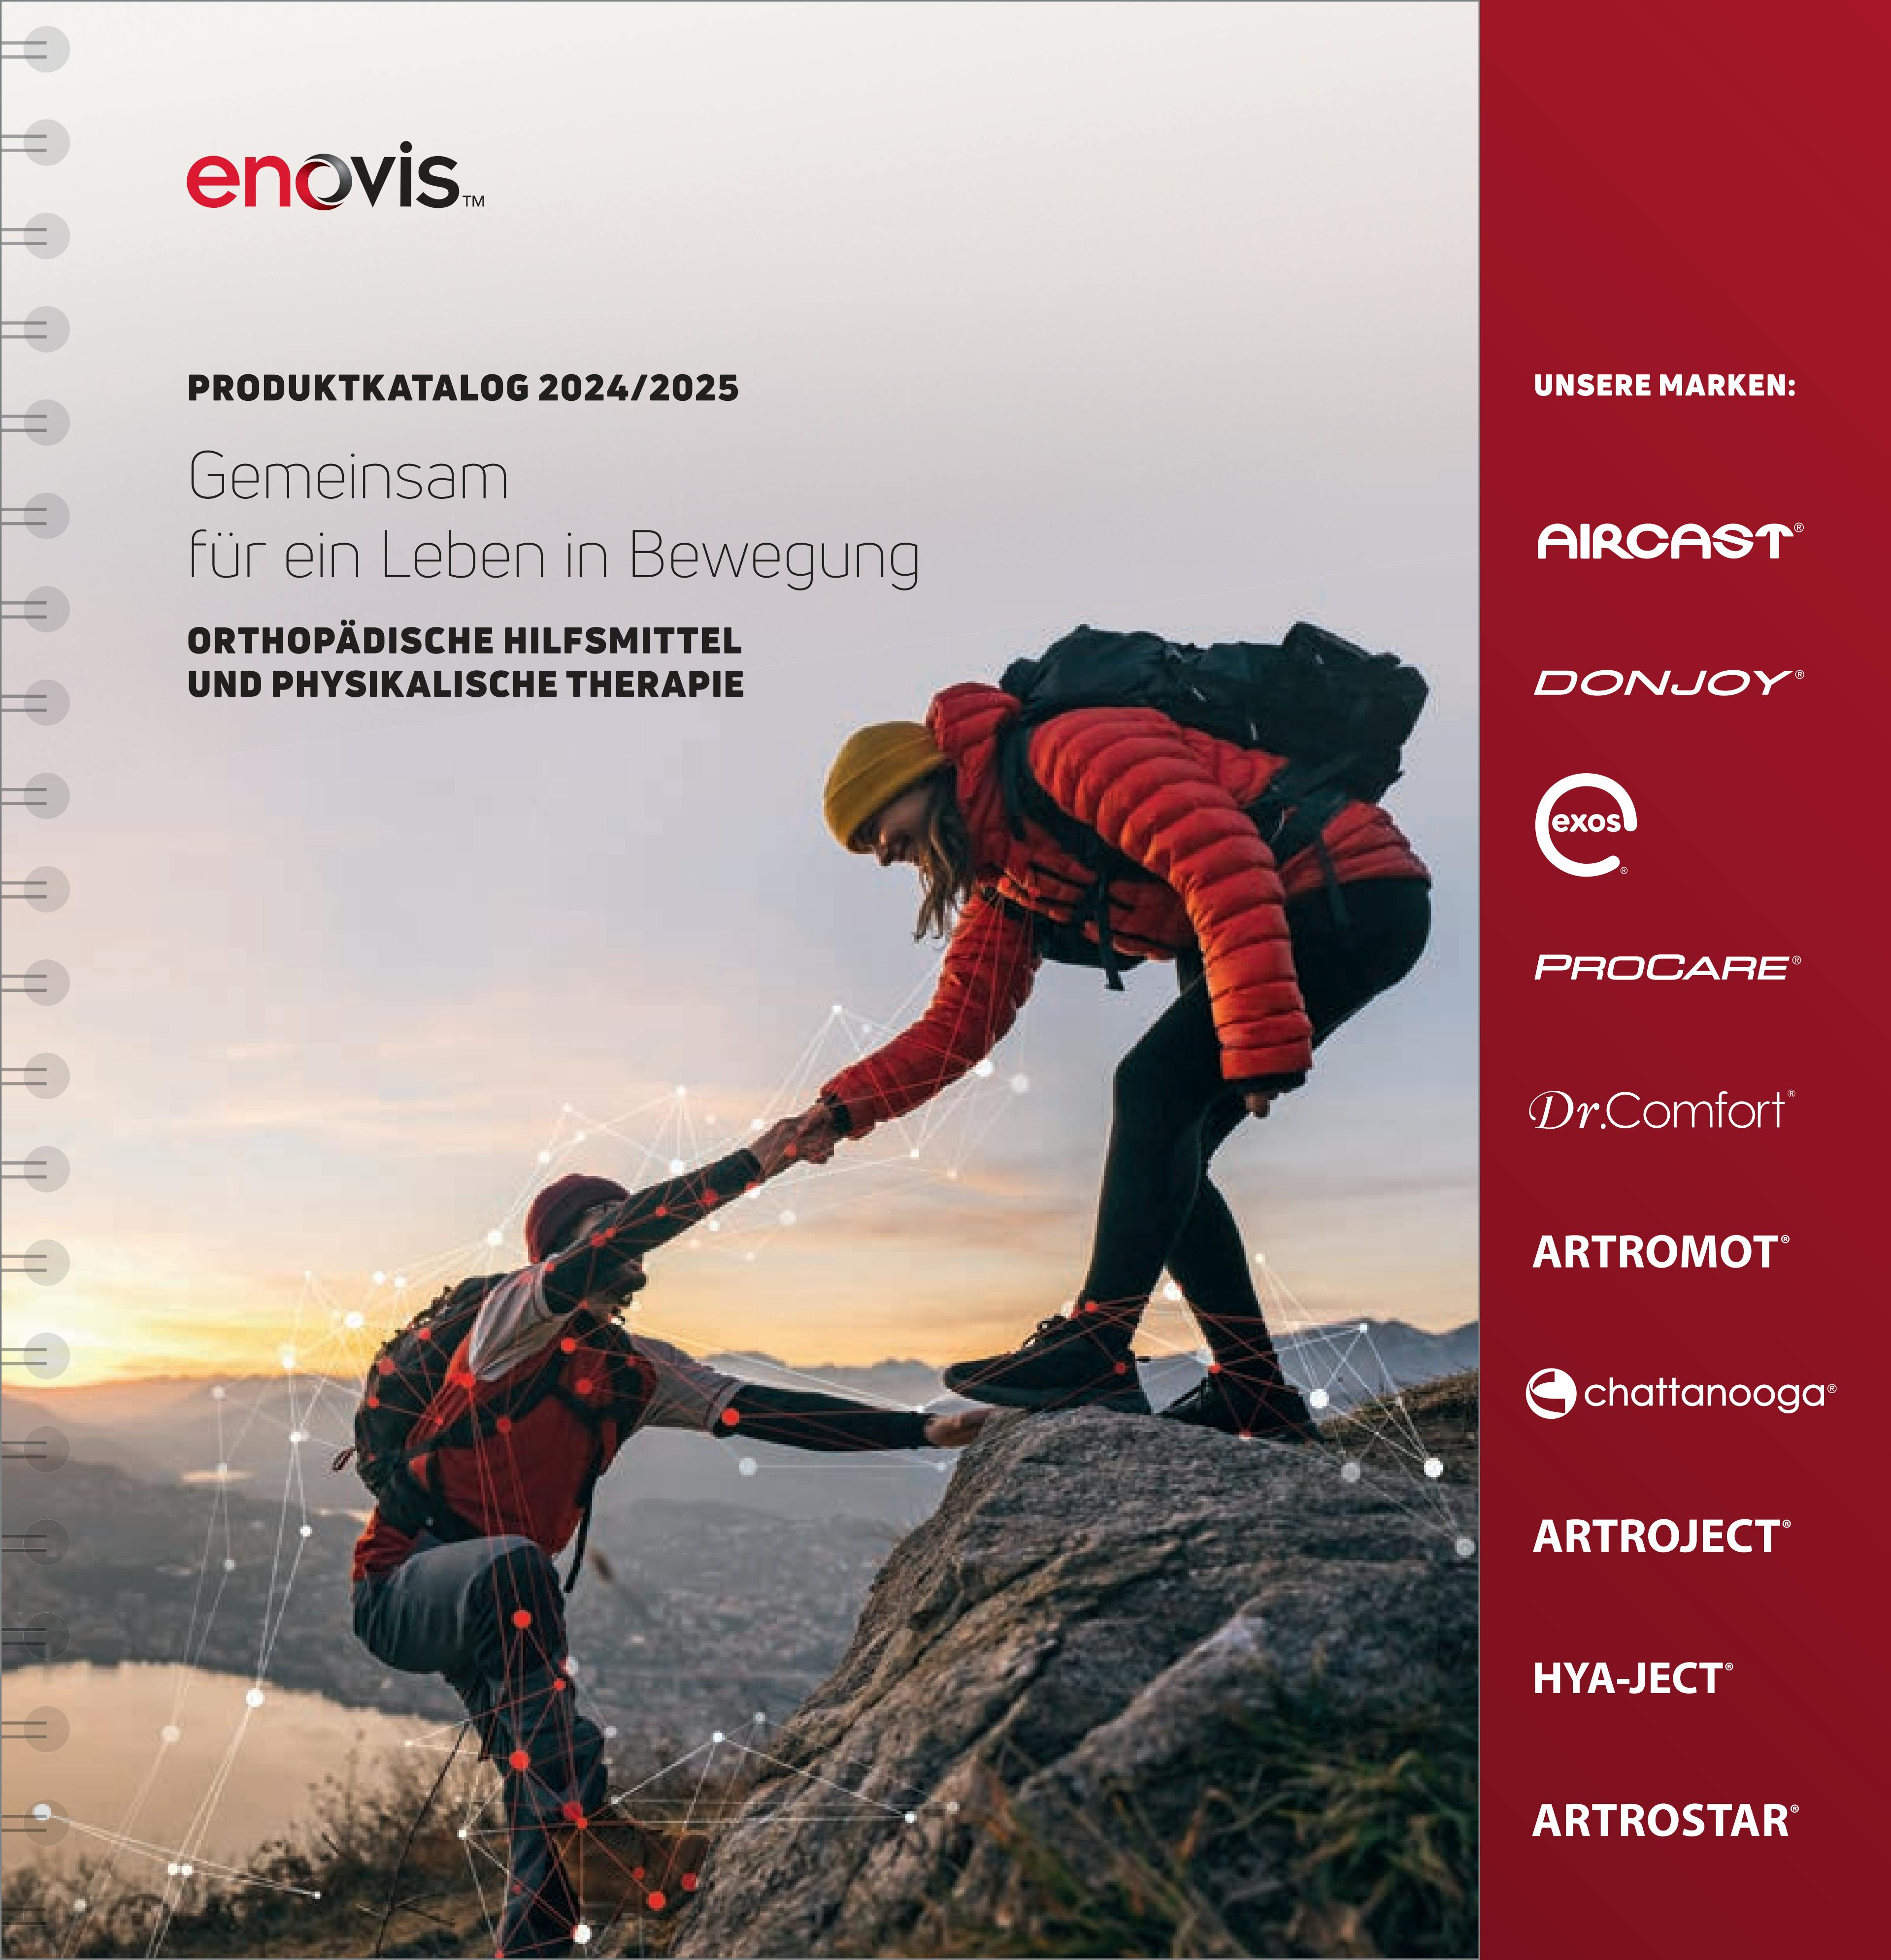 Produktkatalog Enovis 2023-2024_ENV-KAT-001-REV.B-2023-02-21.pdf